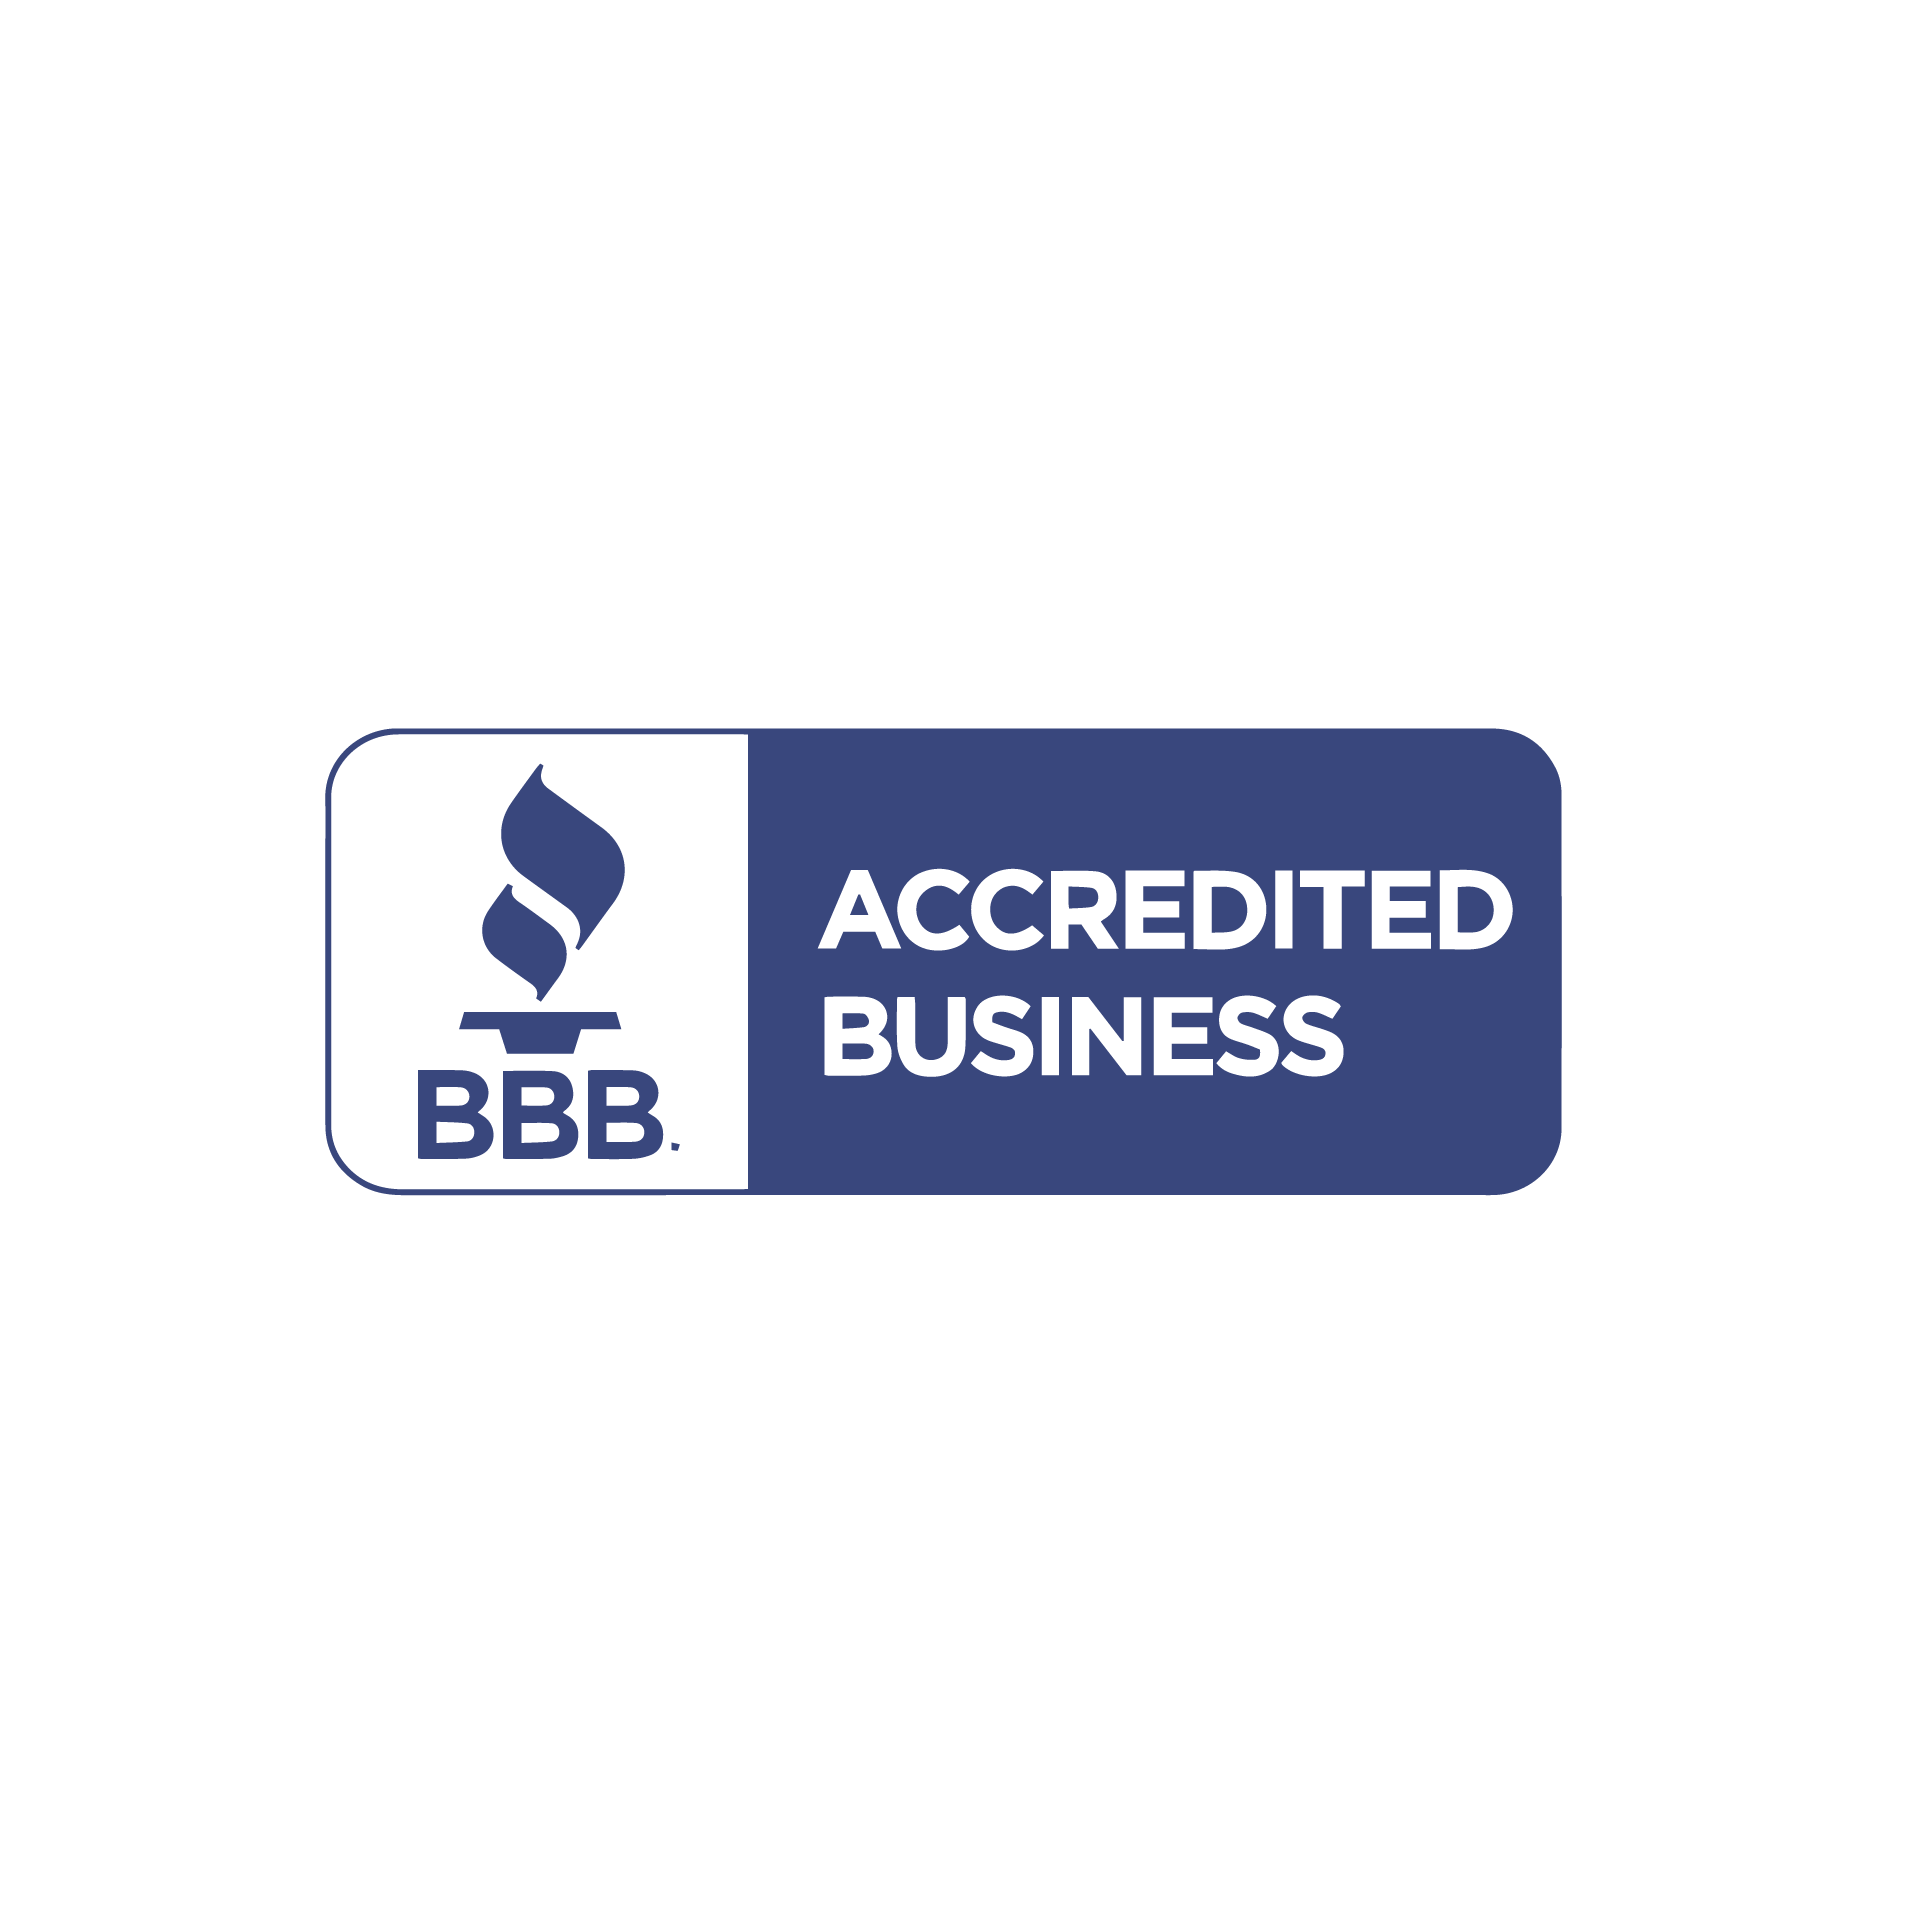 bbb-certification-logo